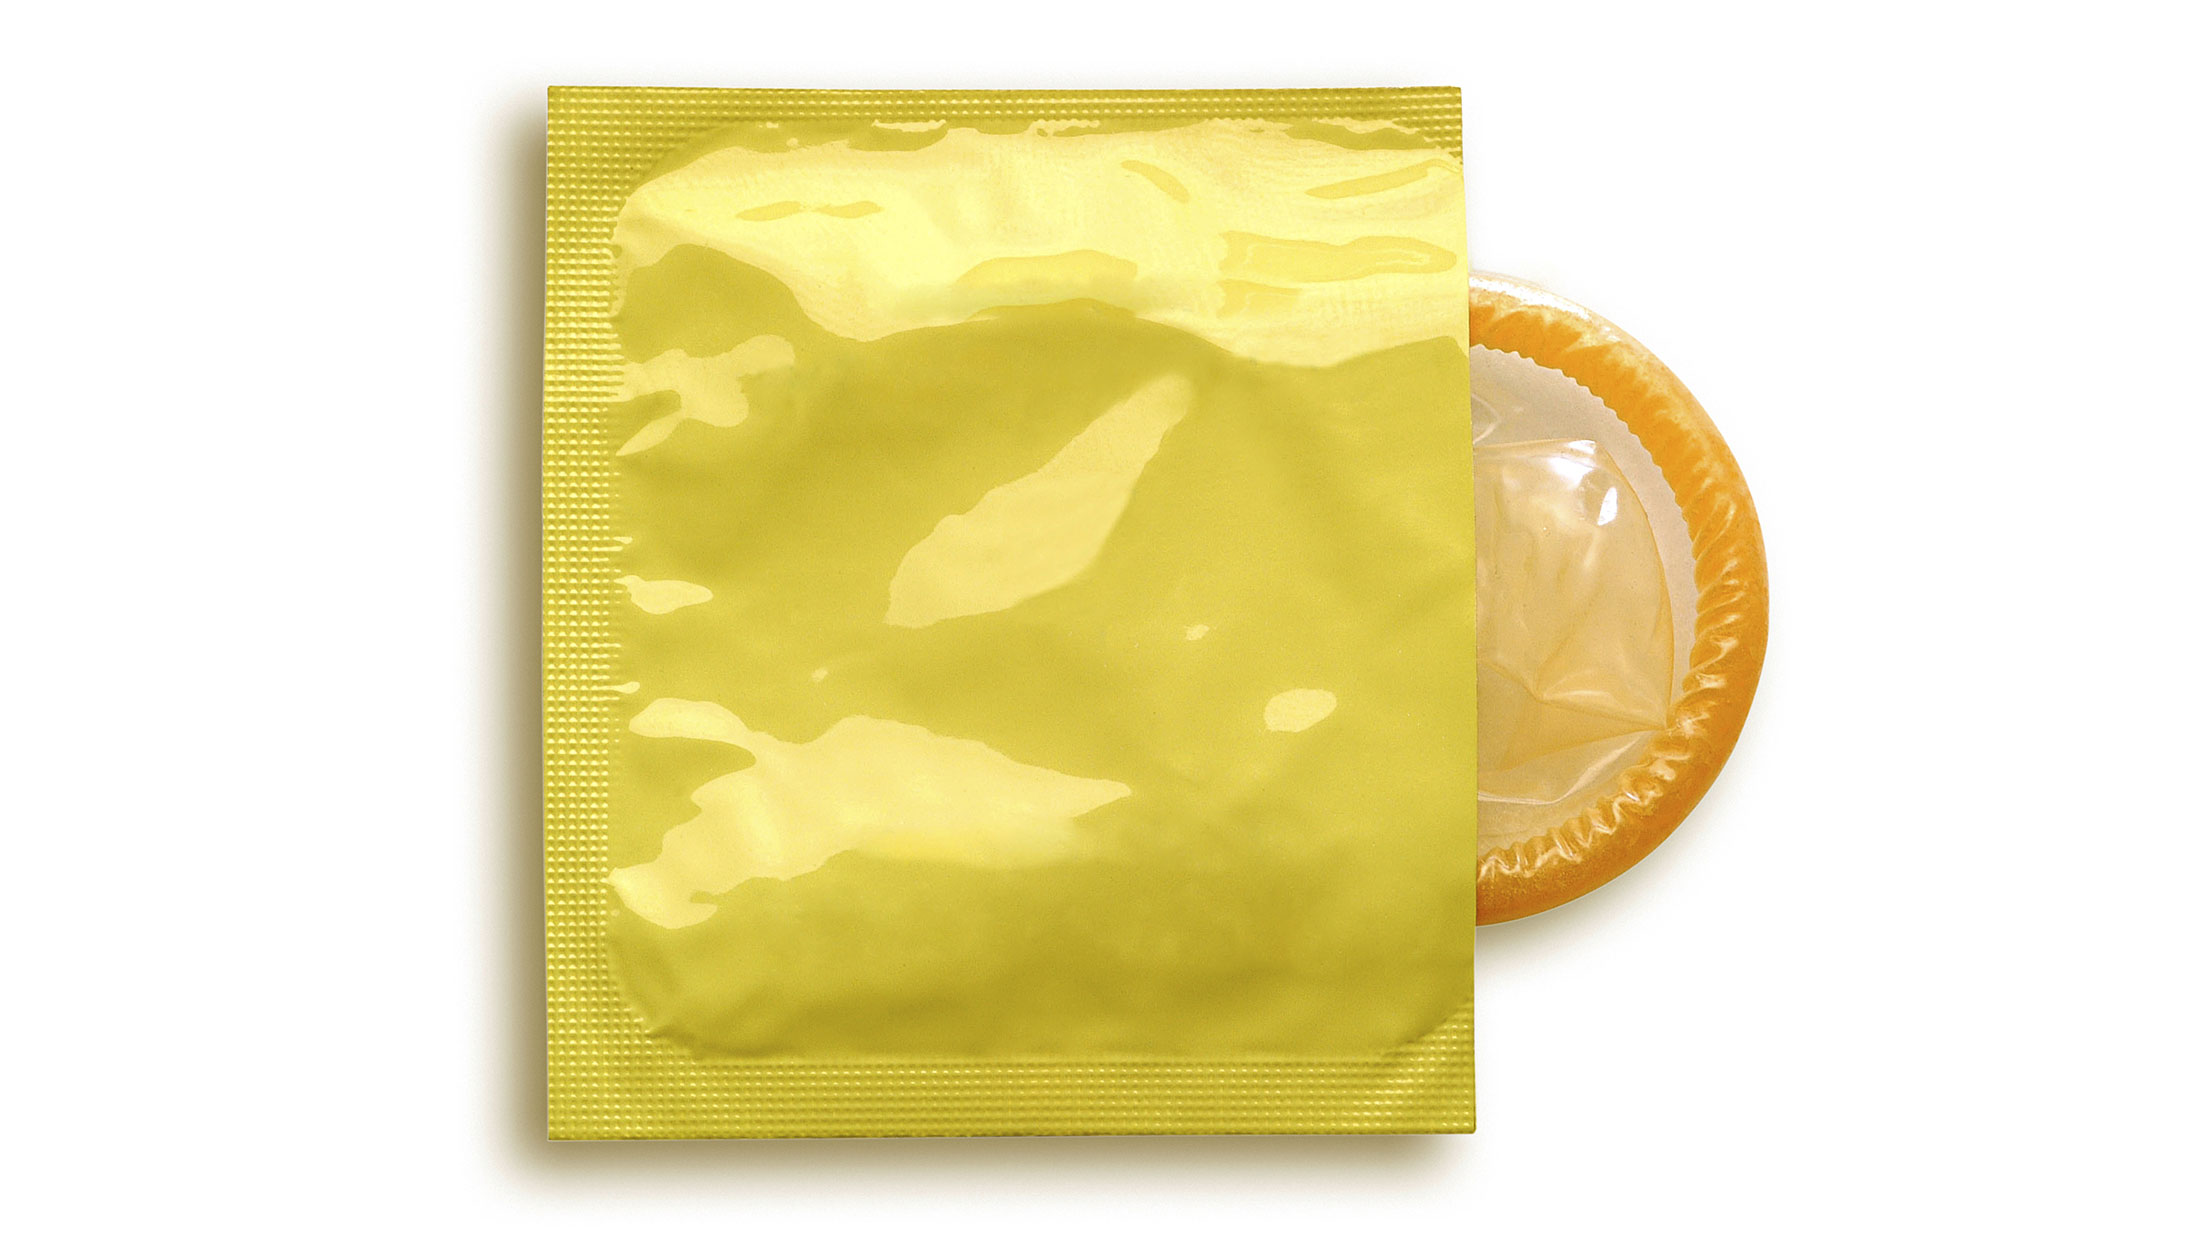 Business plan condoms